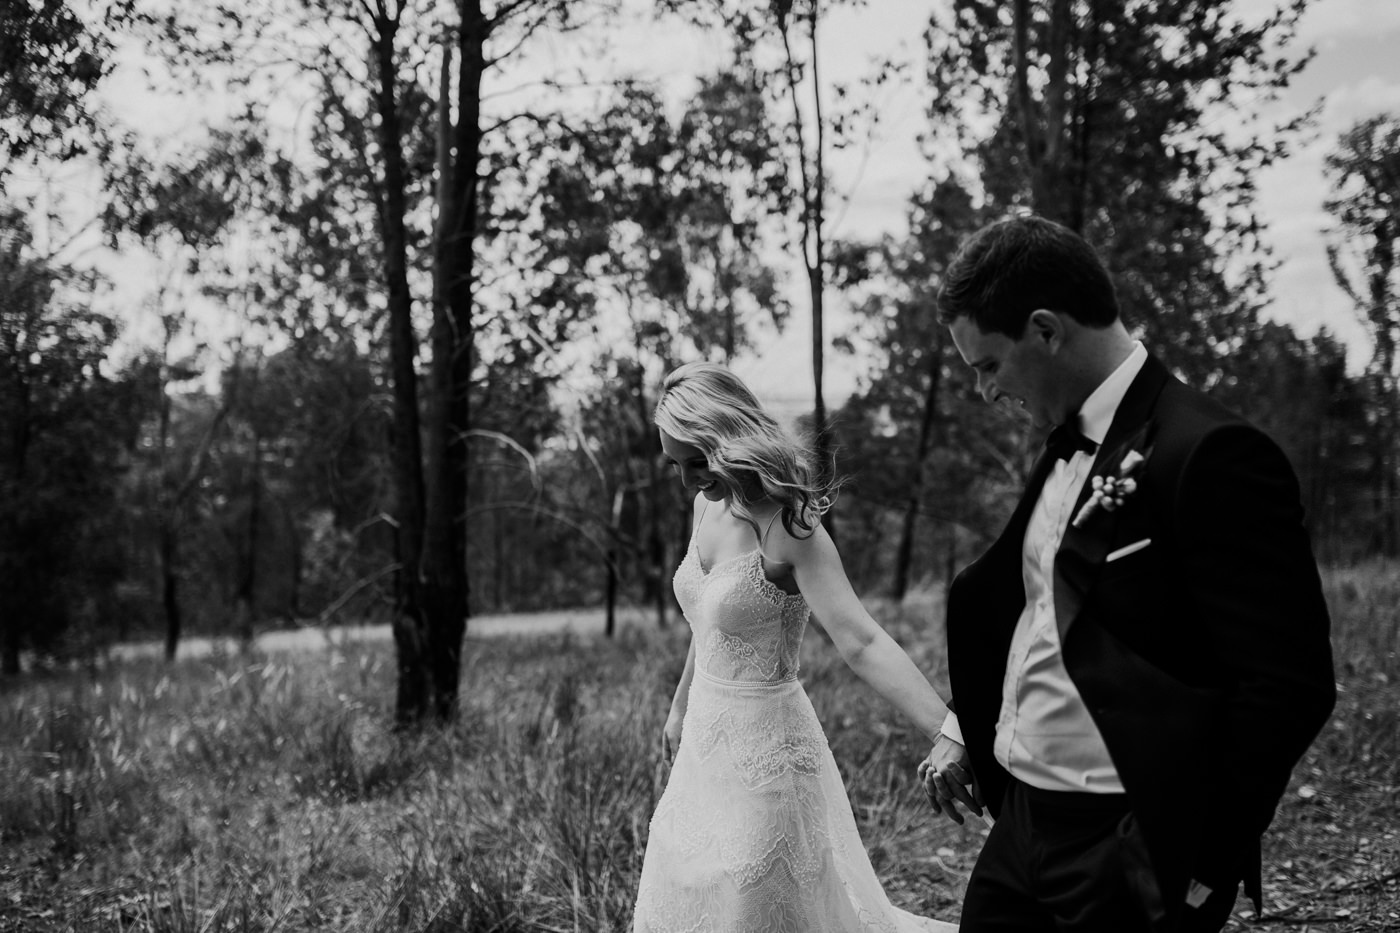 Anthony & Eliet - Wagga Wagga Wedding - Country NSW - Samantha Heather Photography-66.jpg